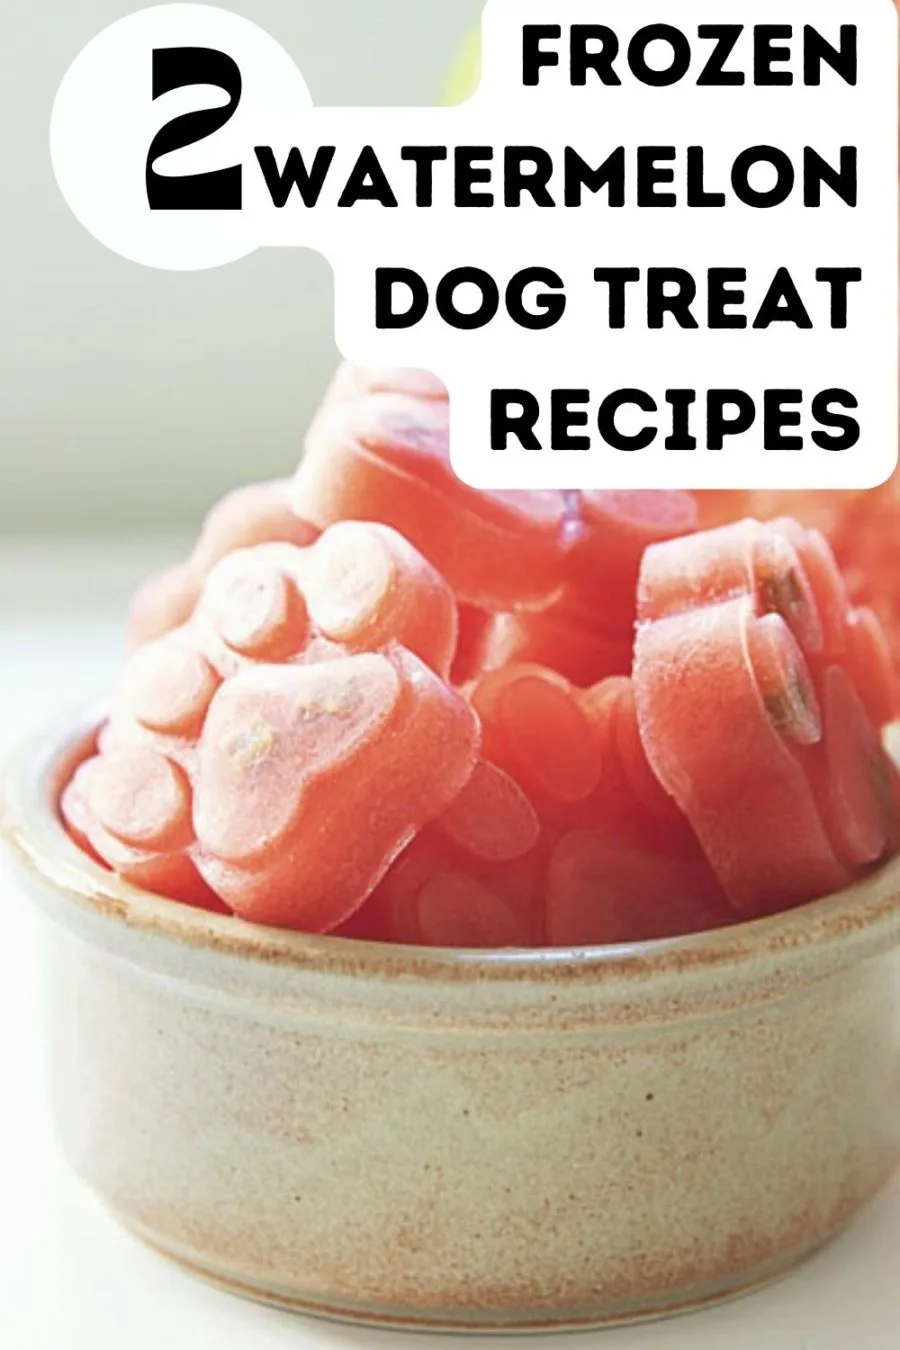 Frozen Watermelon Dog Treats: 2 Easy Recipes to Delight Your Dog!